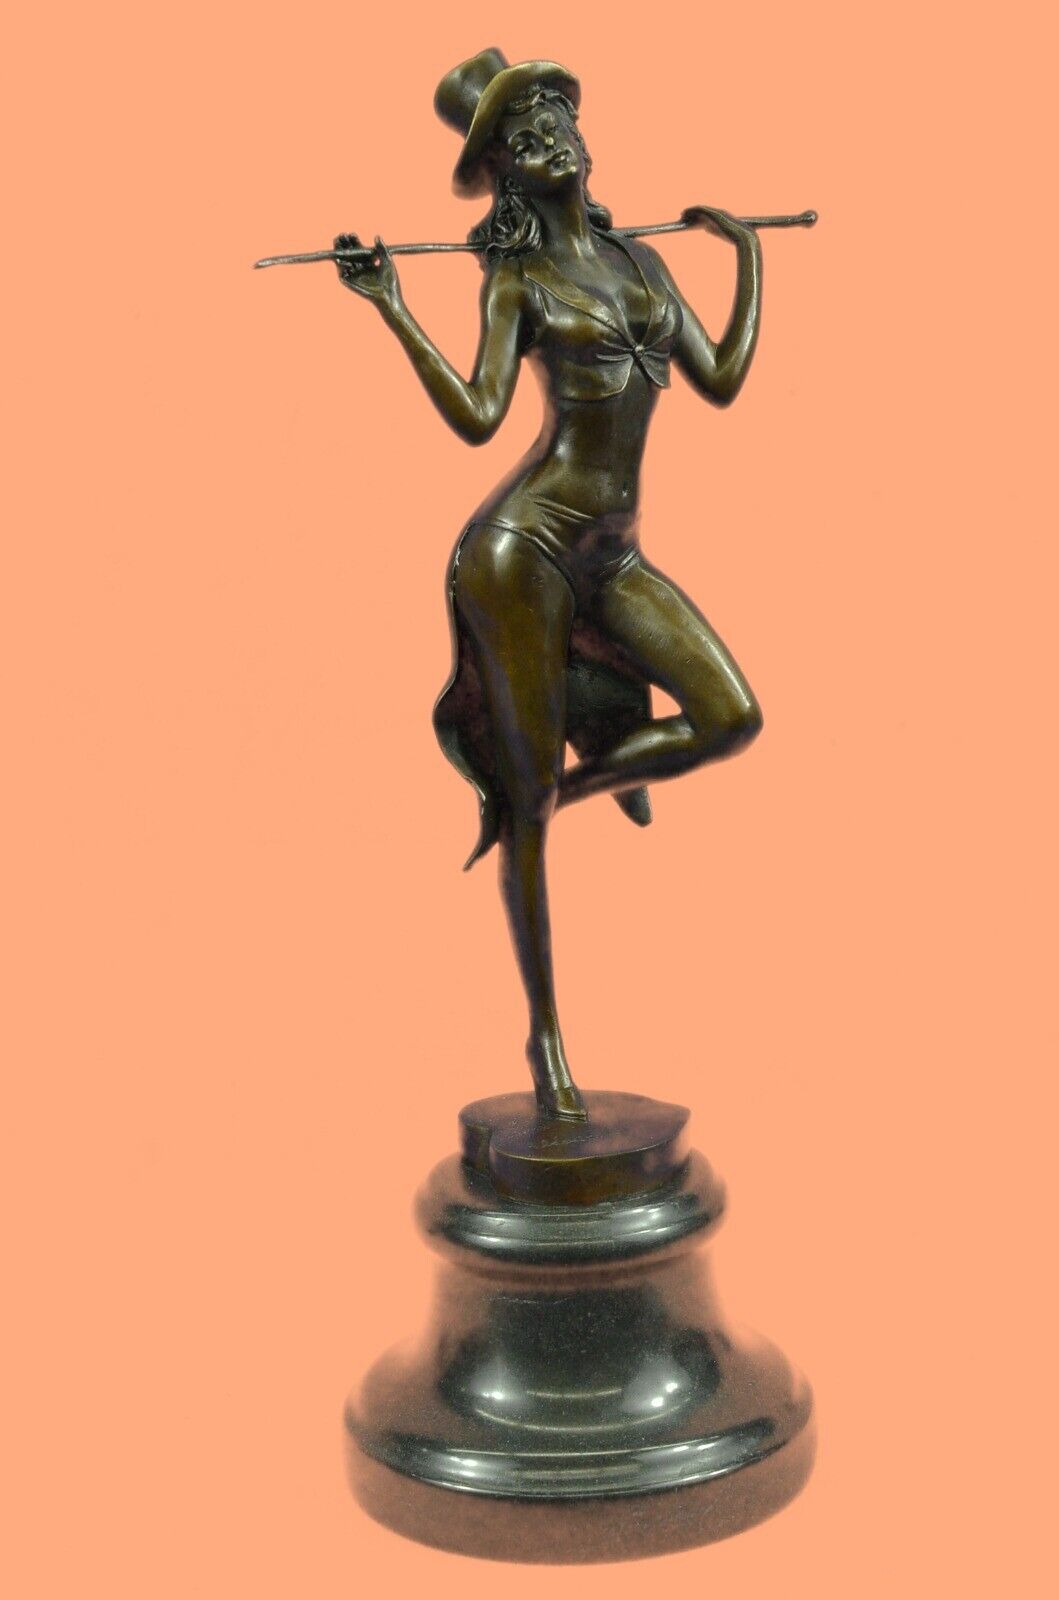 100% Solid Bronze Sculpture Original Chorus Line Dancer Statue Figurine Decor